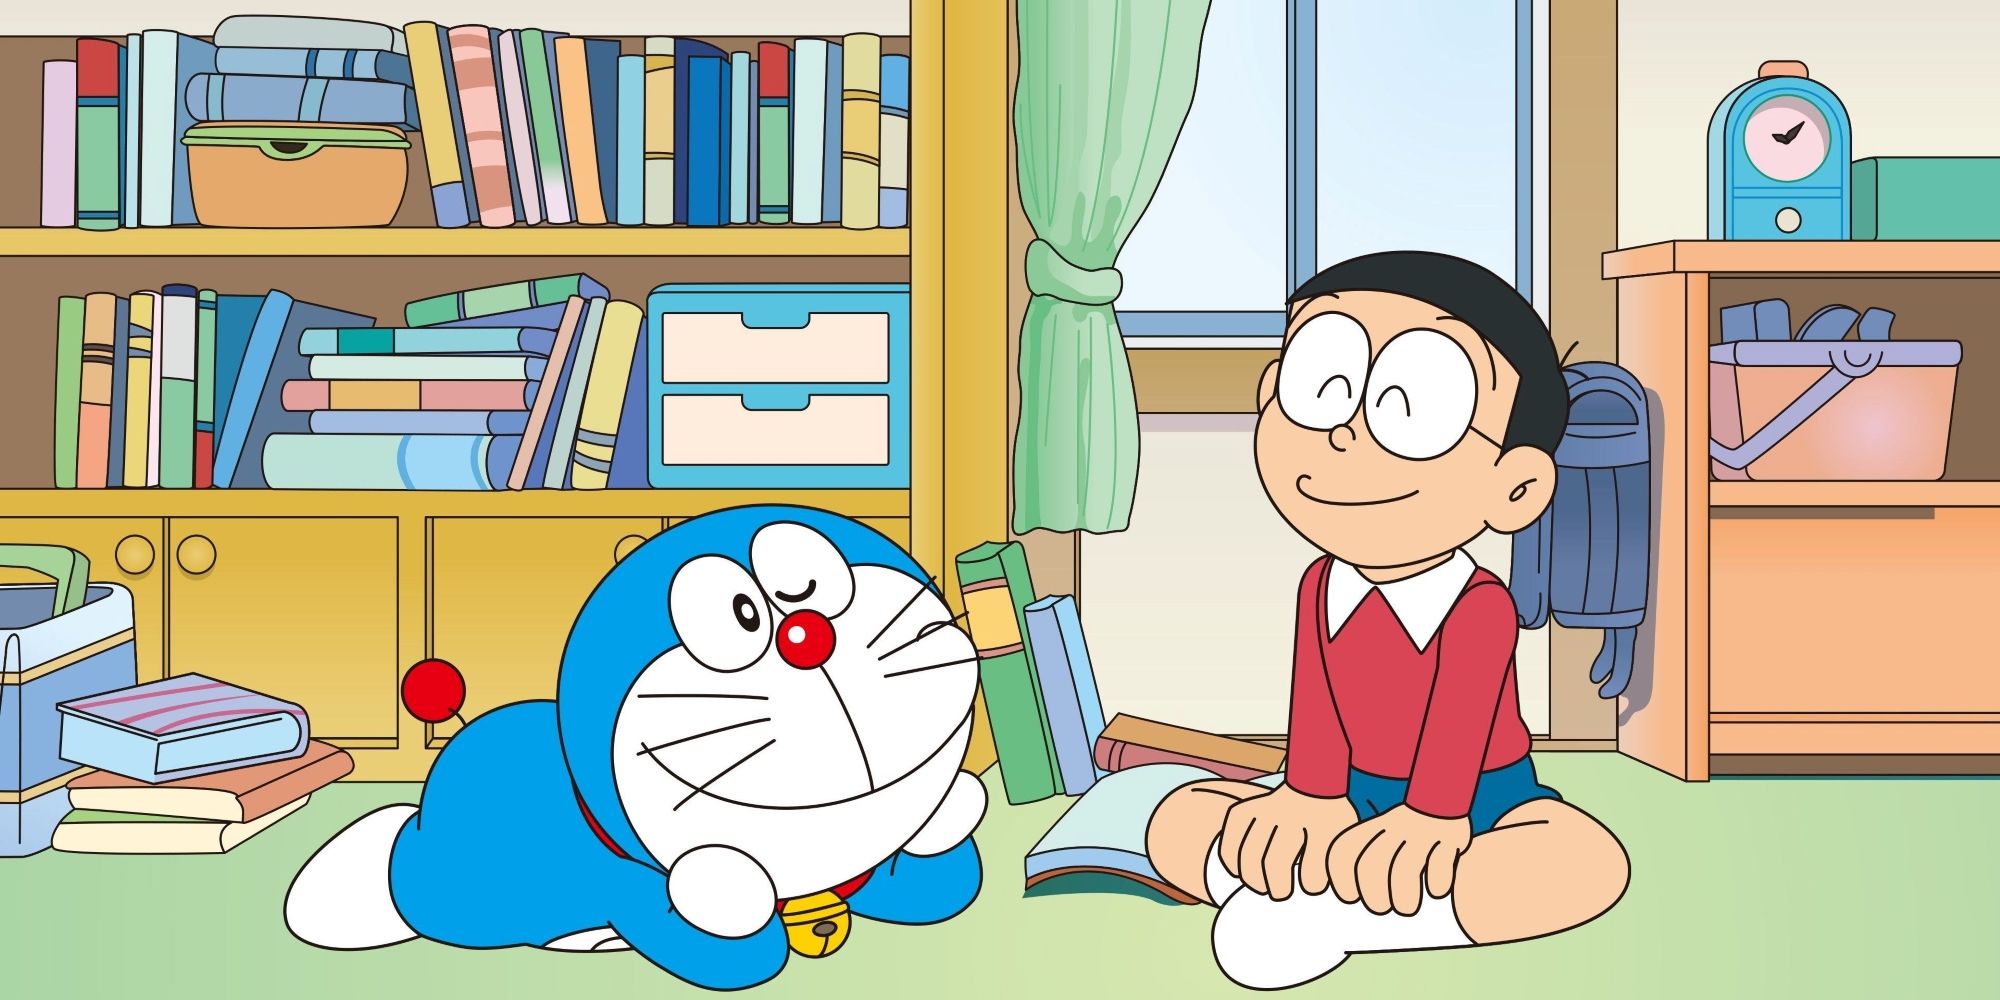 Doraemon and Nobita sitting happily on the floor